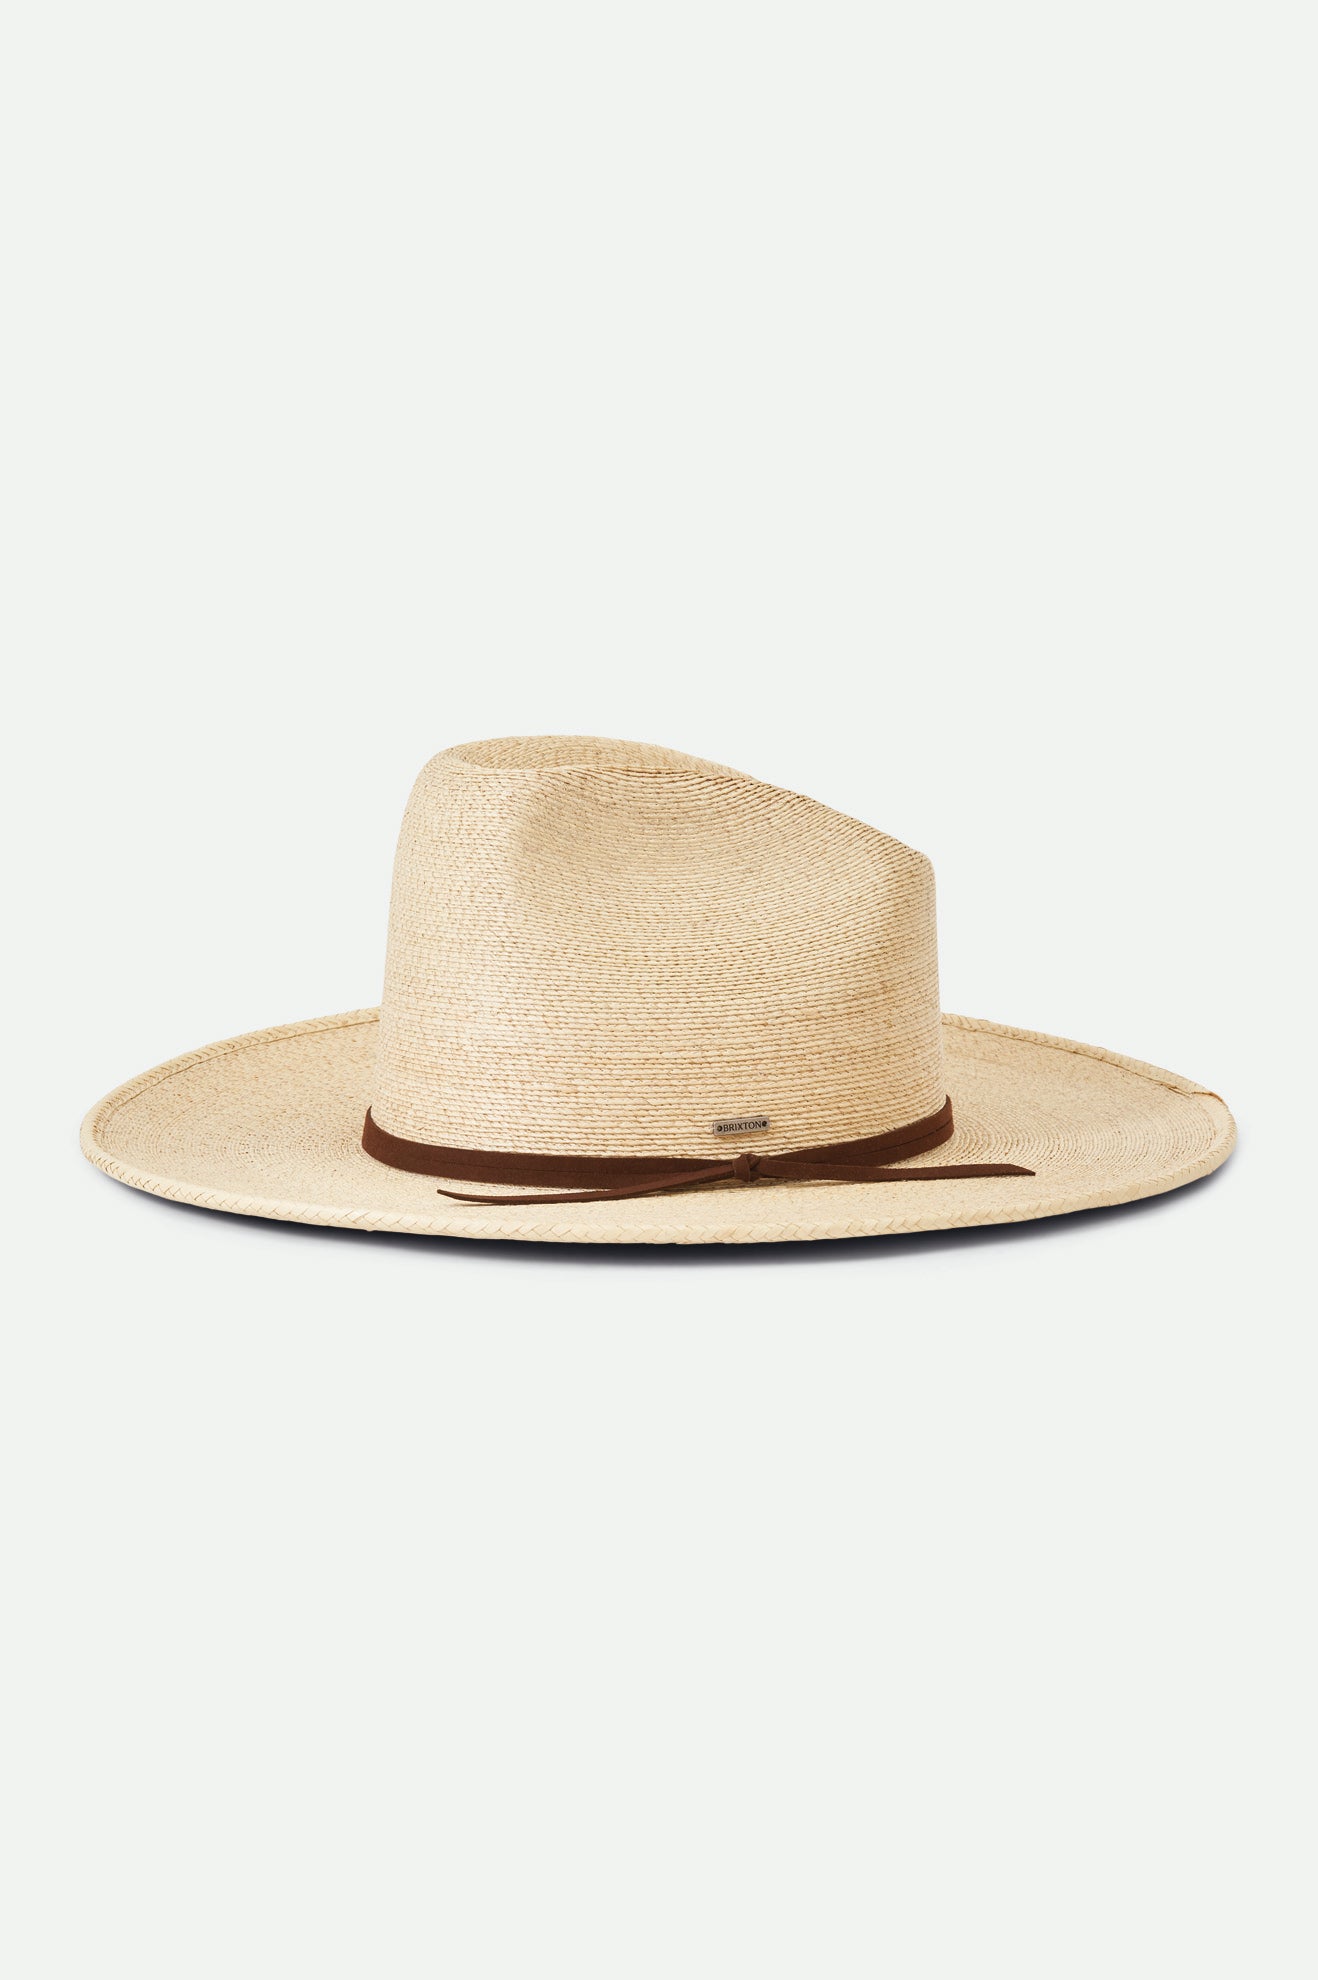 Sedona Straw Reserve Cowboy Hat - Natural